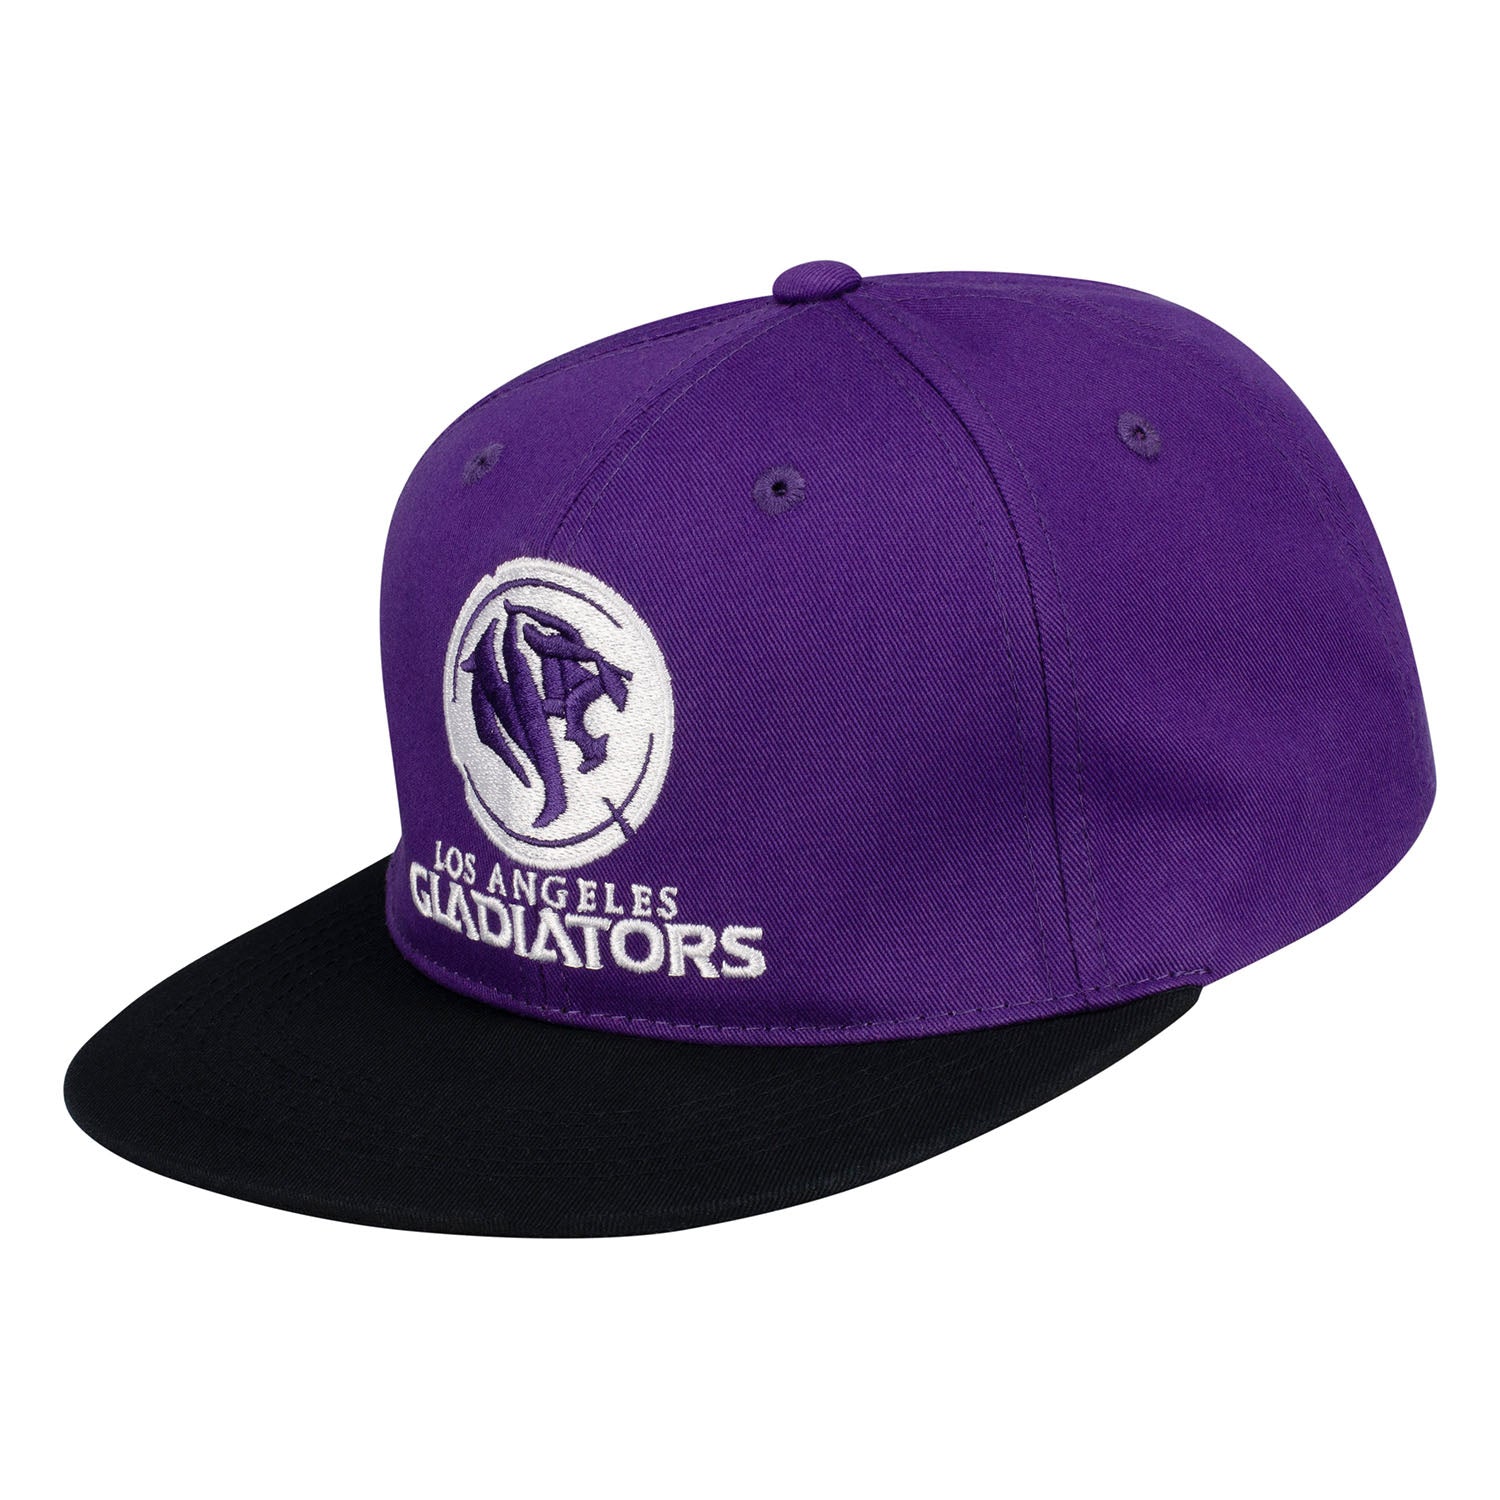 Los Angeles Gladiators Purple Snapback Hat - Left View